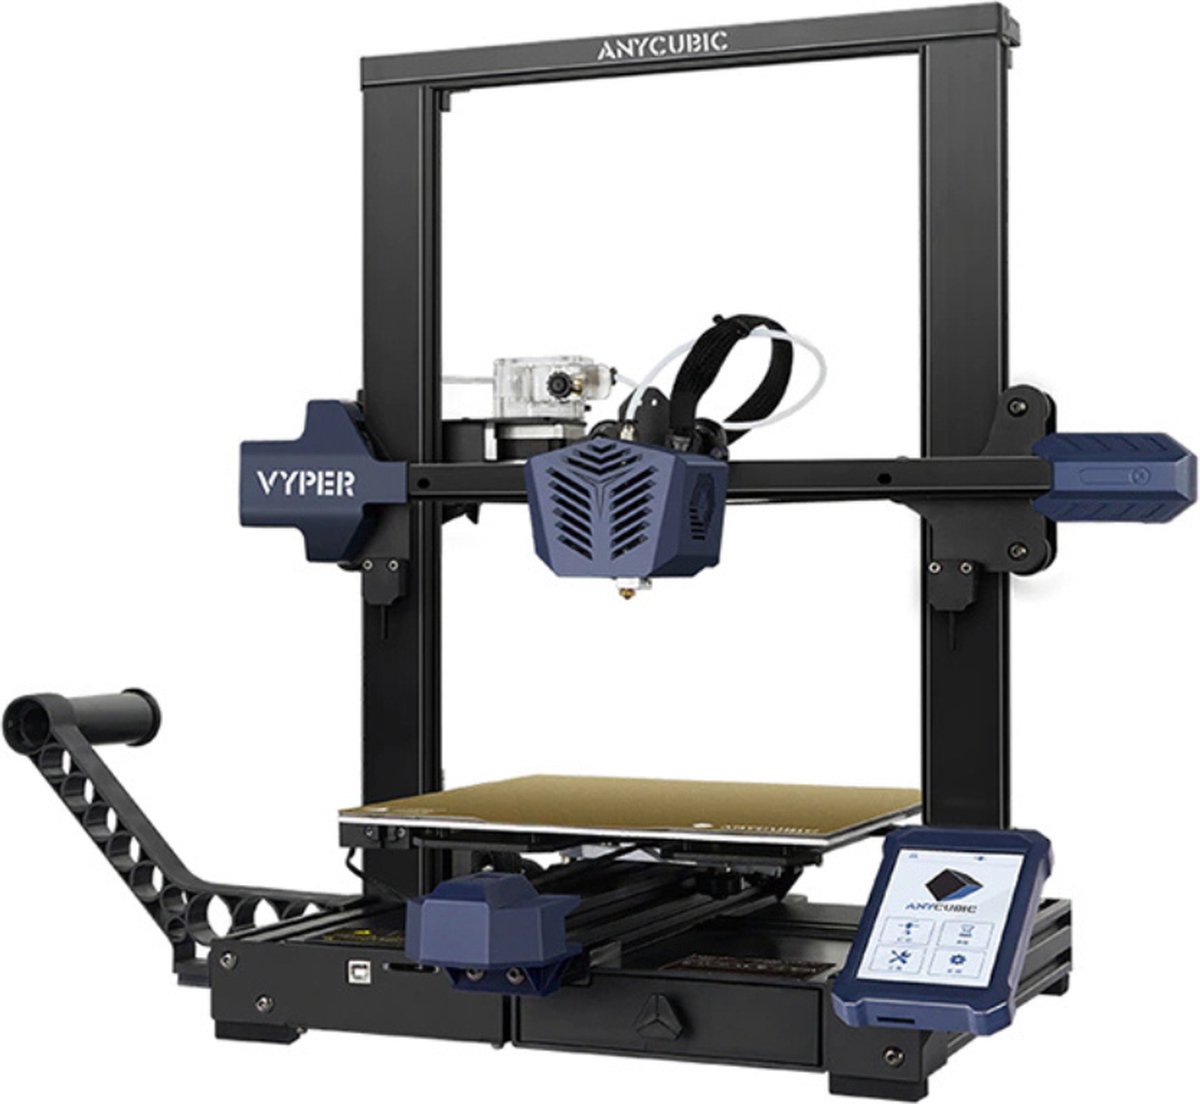 Anycubic Vyper - 3D Printer - Bouwpakket - Starterspakket - DIY - 245 x 245 x 260 mm